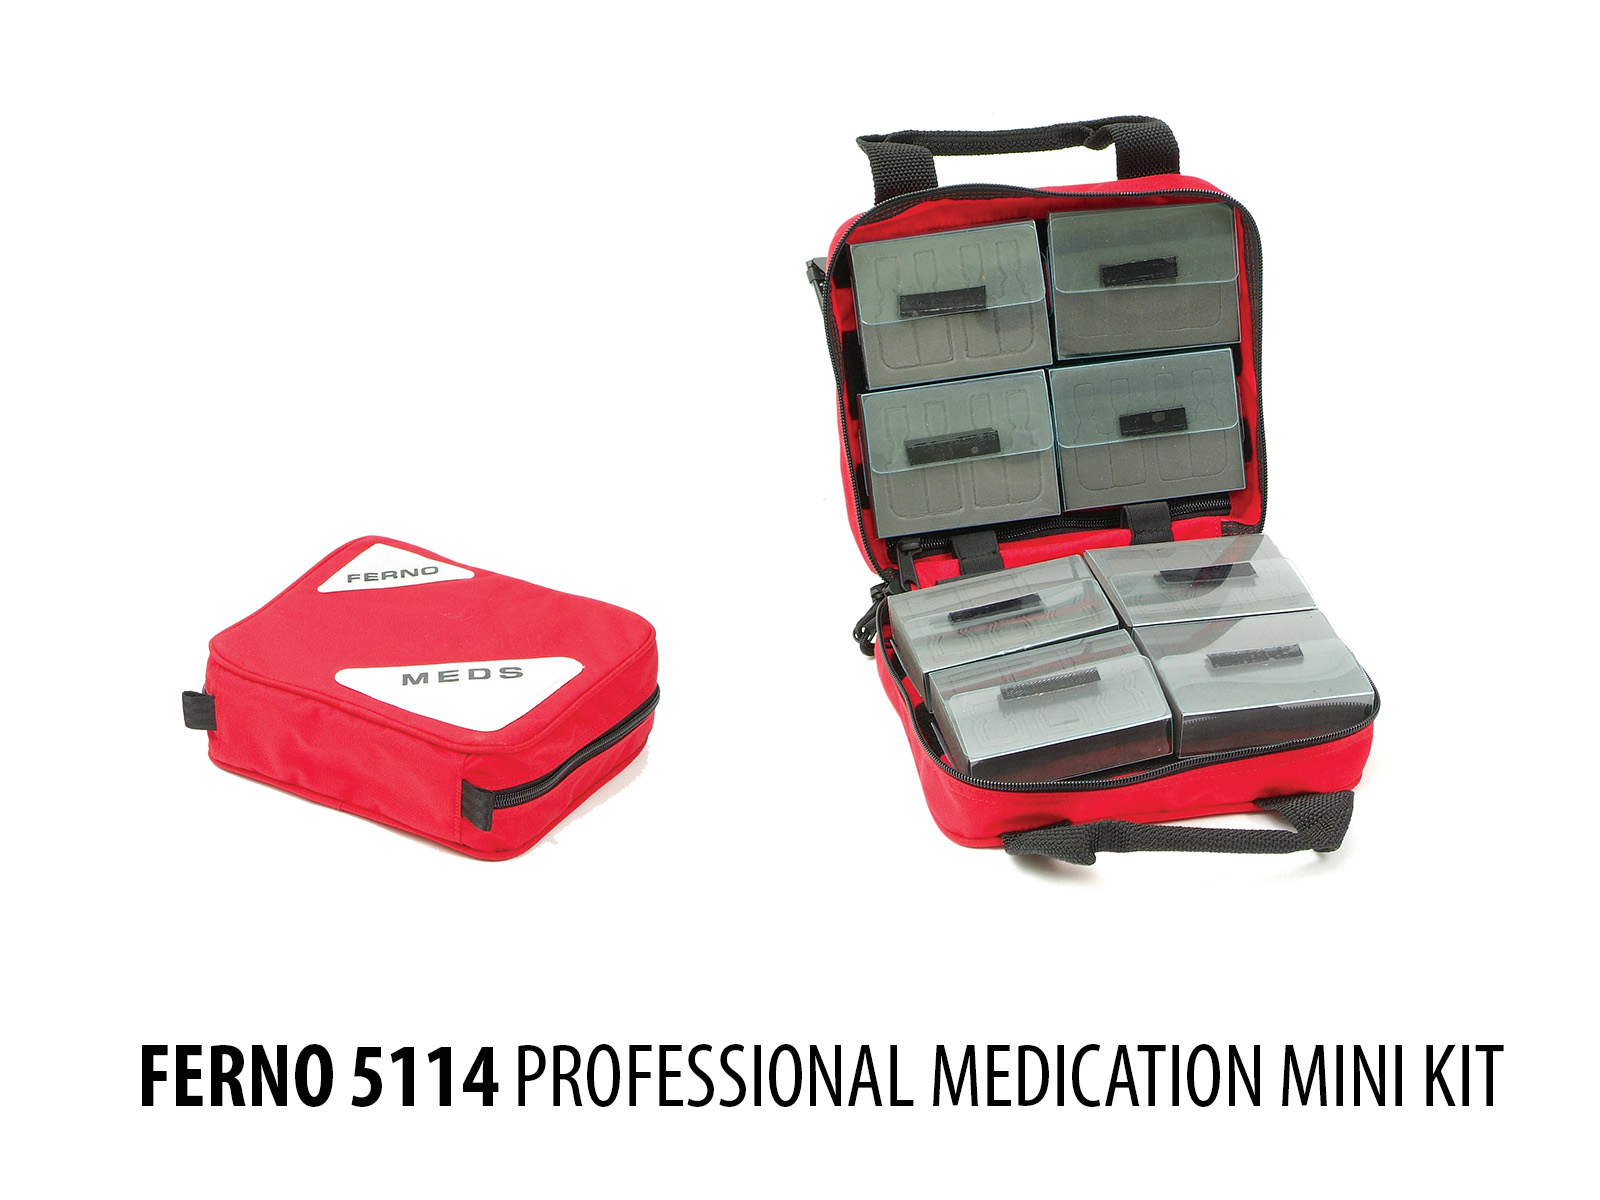 Ferno 5114 Professional Medication Mini Kit